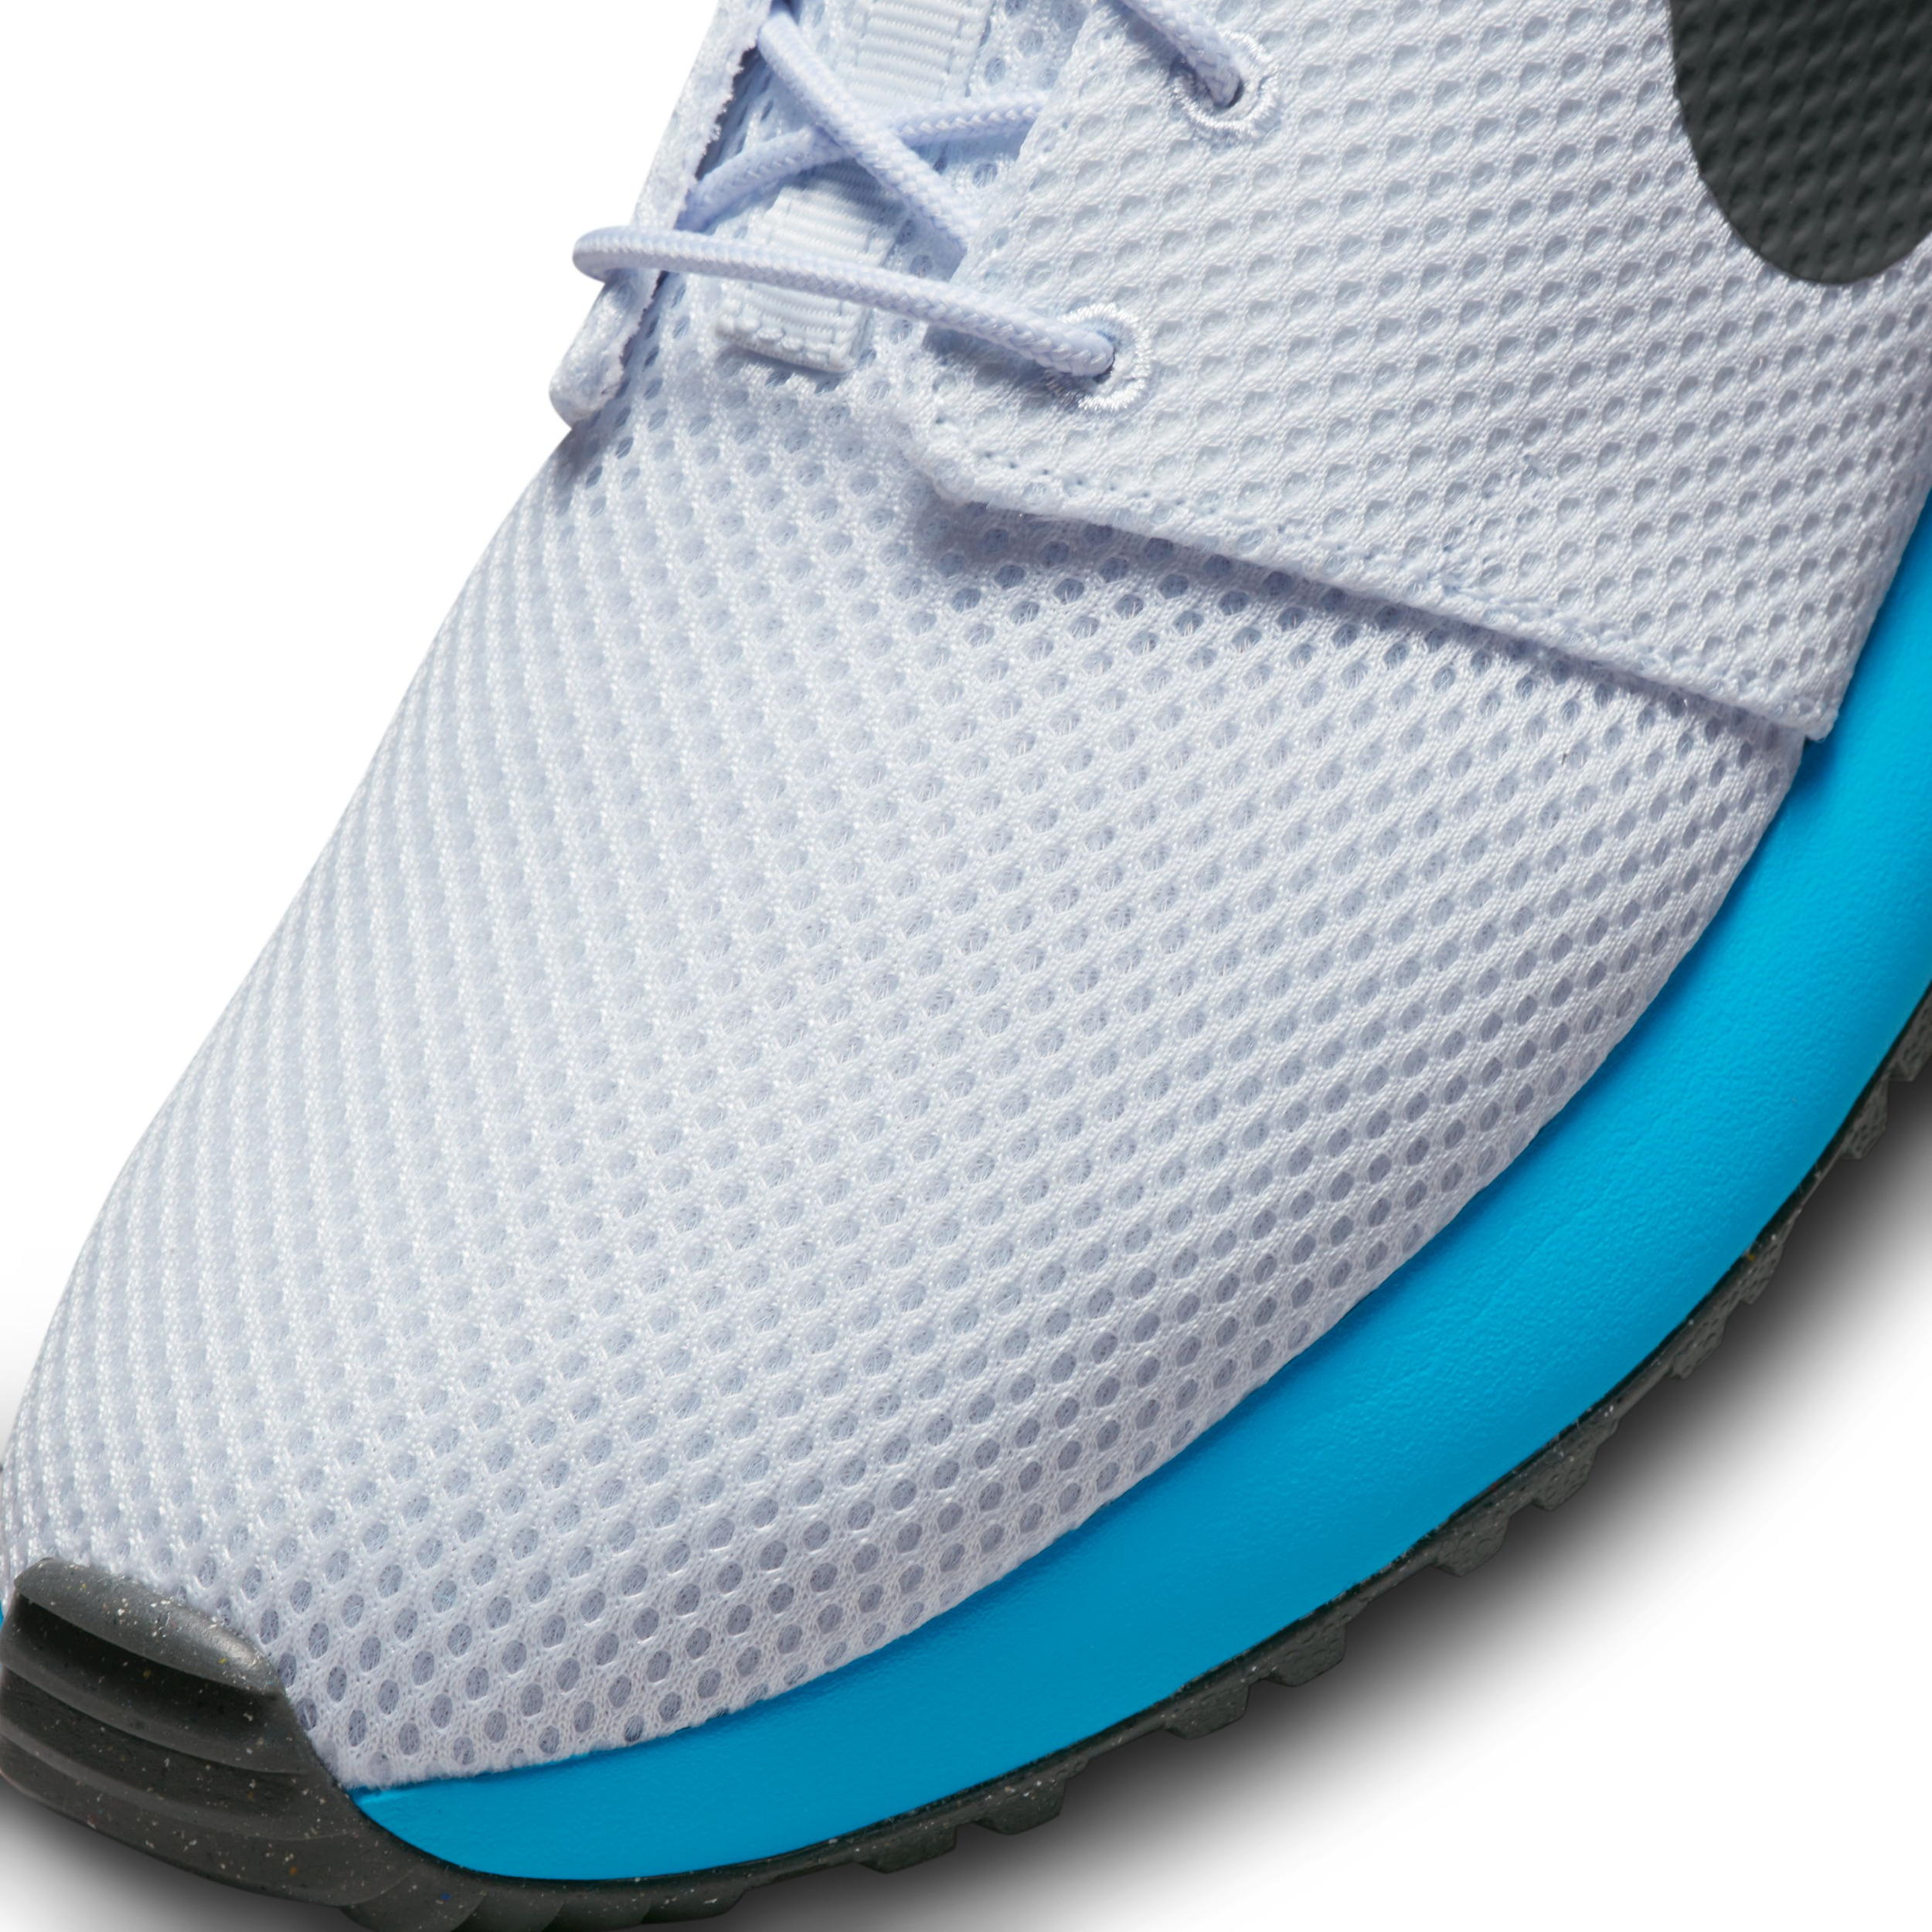 Nike ROSHE G 2.0 Golfschuh, grey/blue